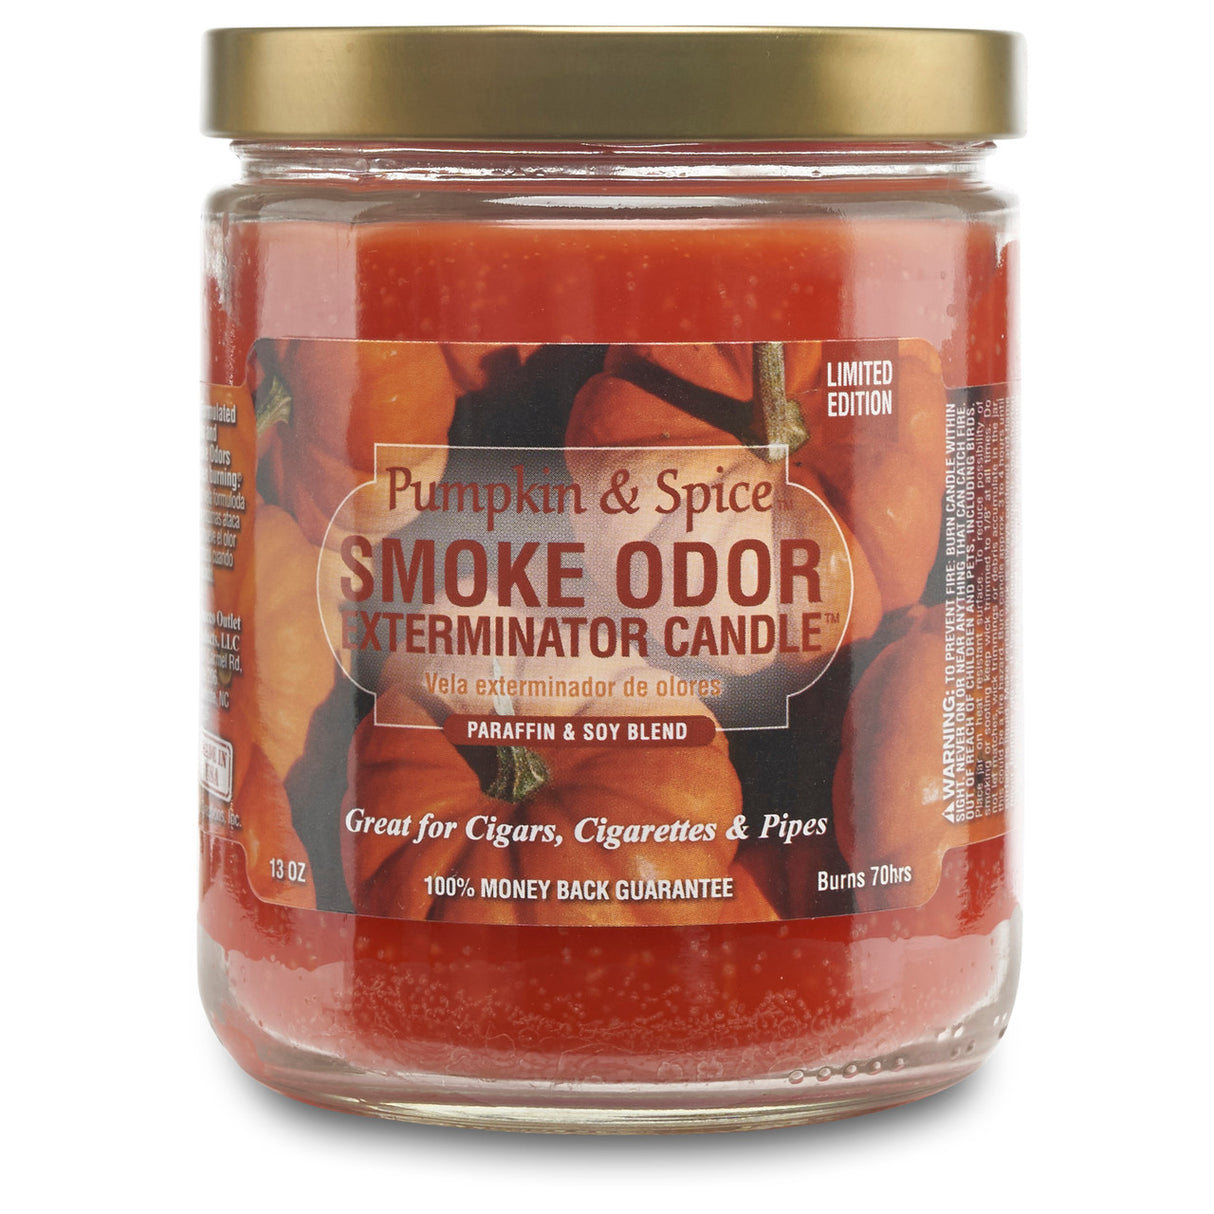 Pumpkin & spice smoke odor exterminator candle for sale